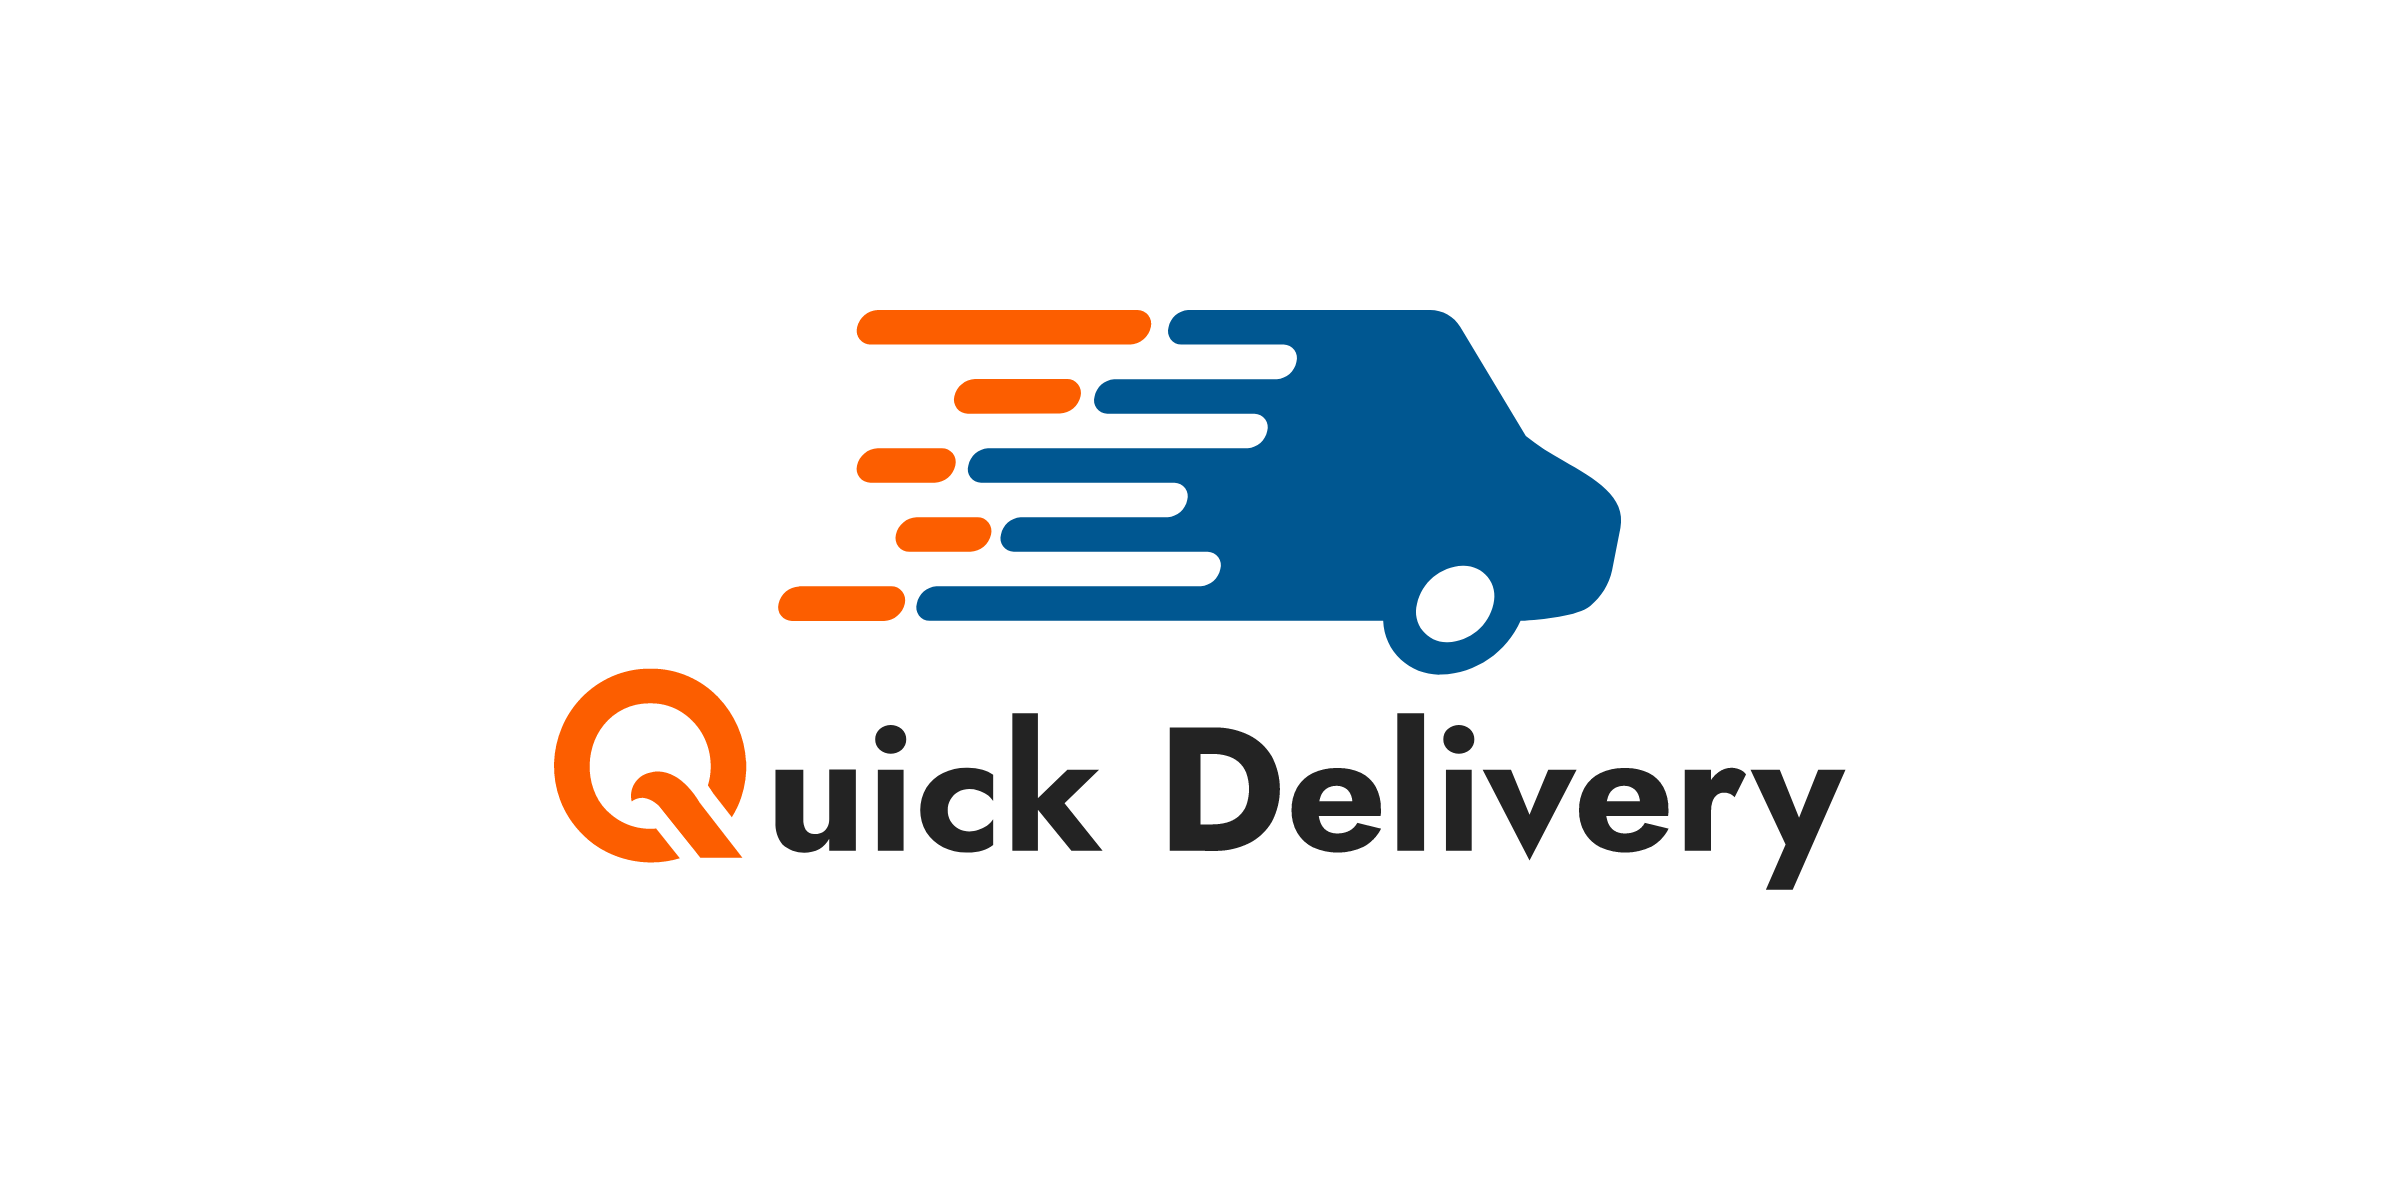 On Demand Delivery Management Software Solution